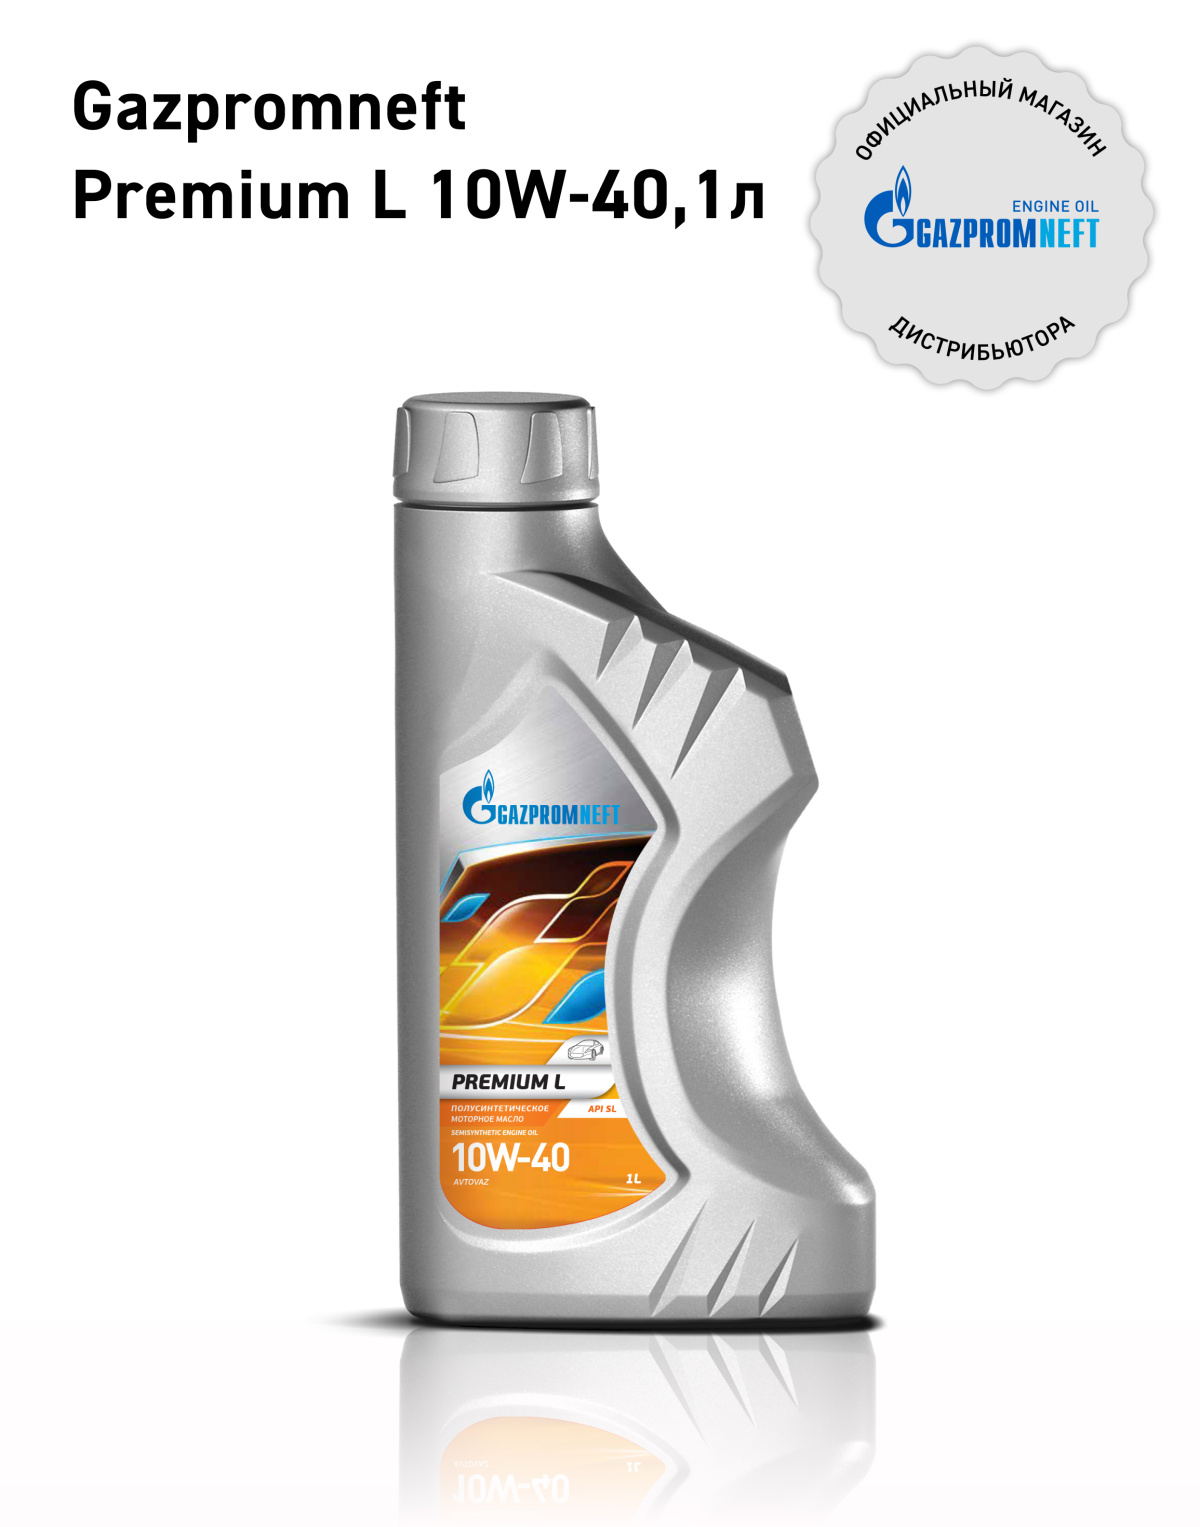 Gazpromneft Premium L 10W-40 кан.1л (0,873 кг) \